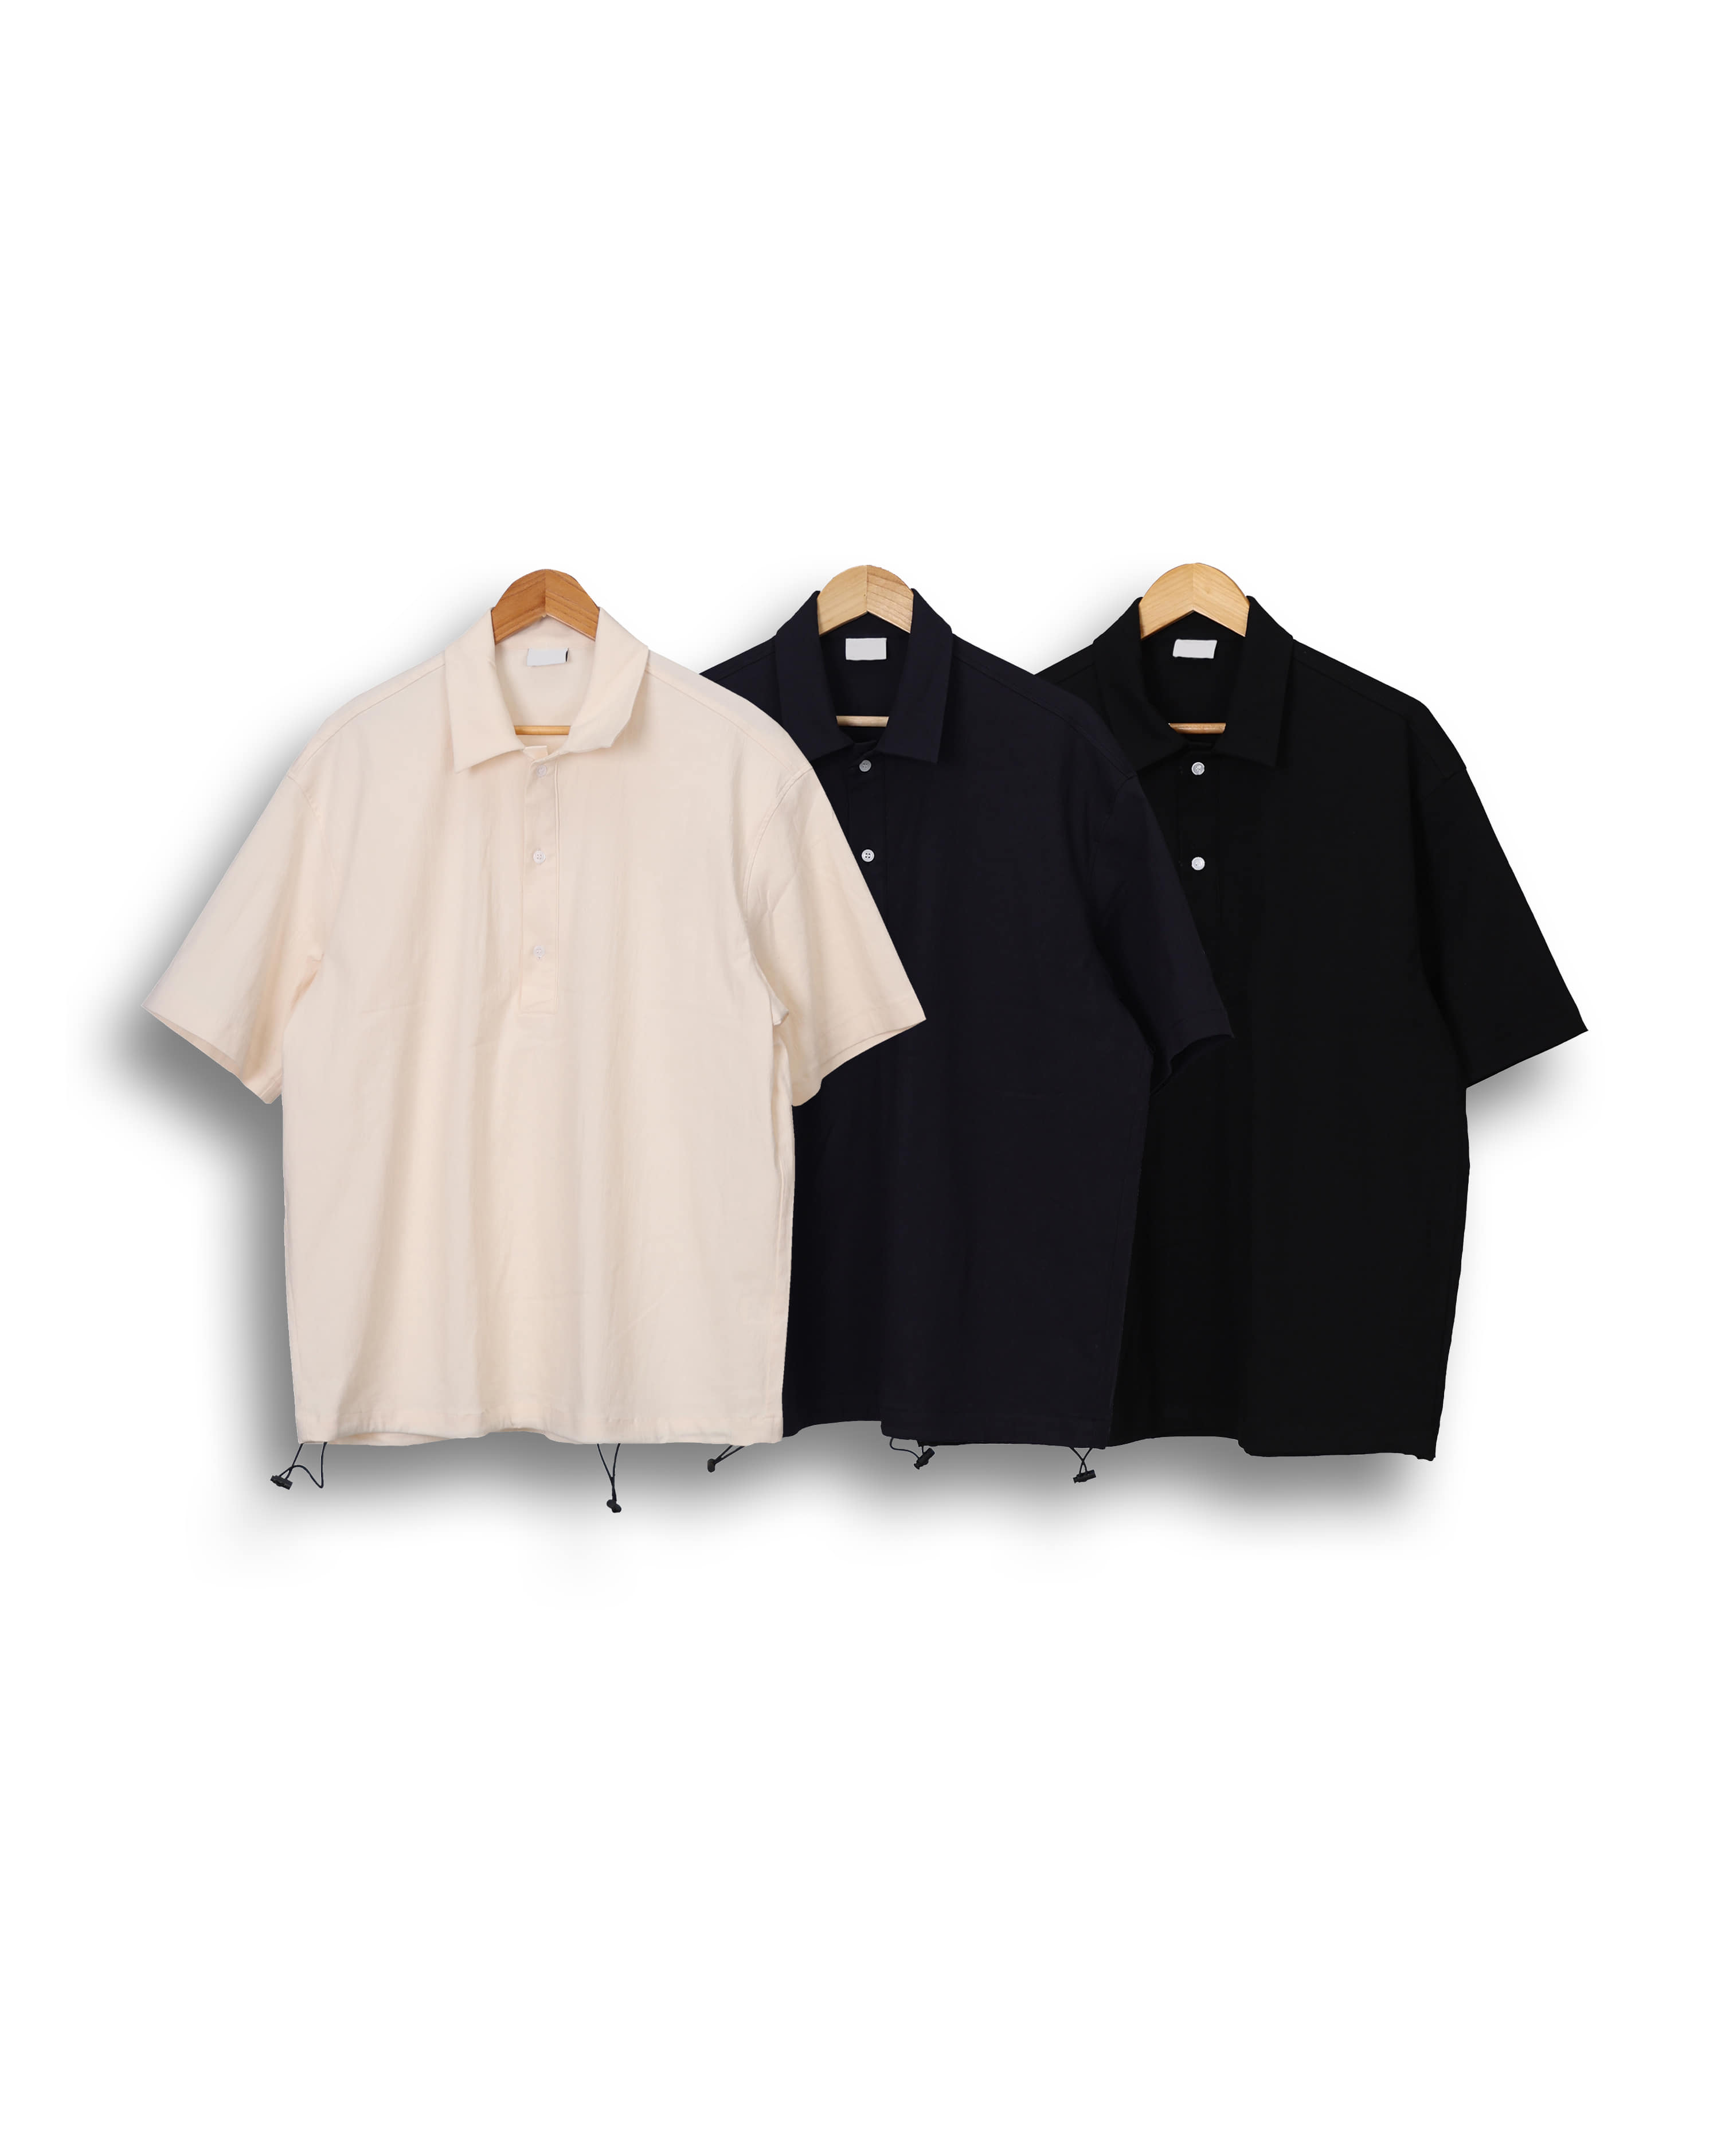 DEN Linen String Pull Over Half Shirts (Black/Navy/Beige)